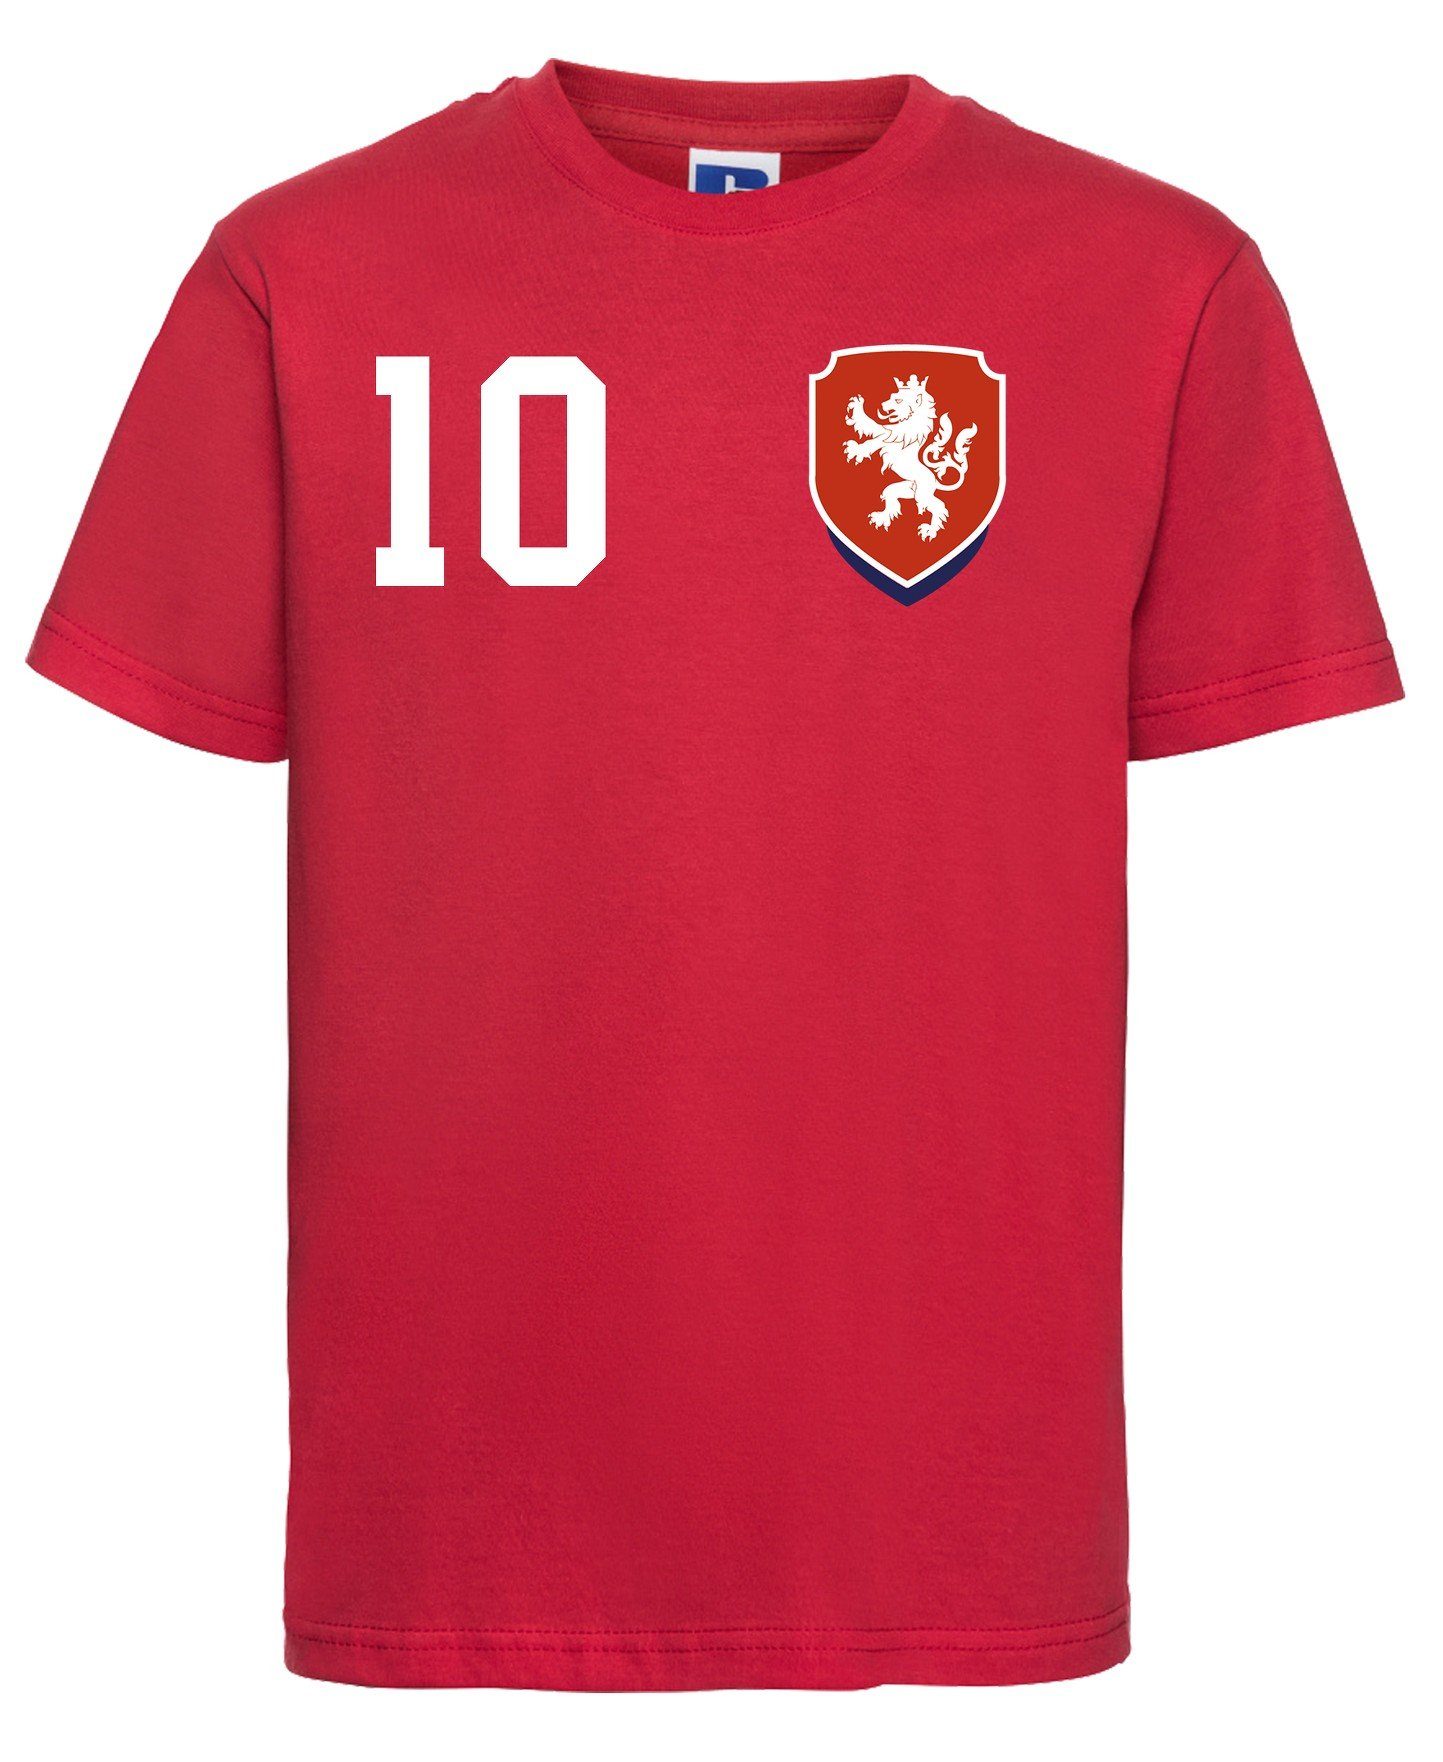 Youth Designz T-Shirt Tschechische Republik Kinder T-Shirt im Fußball Trikot Look mit trendigem Motiv Rot